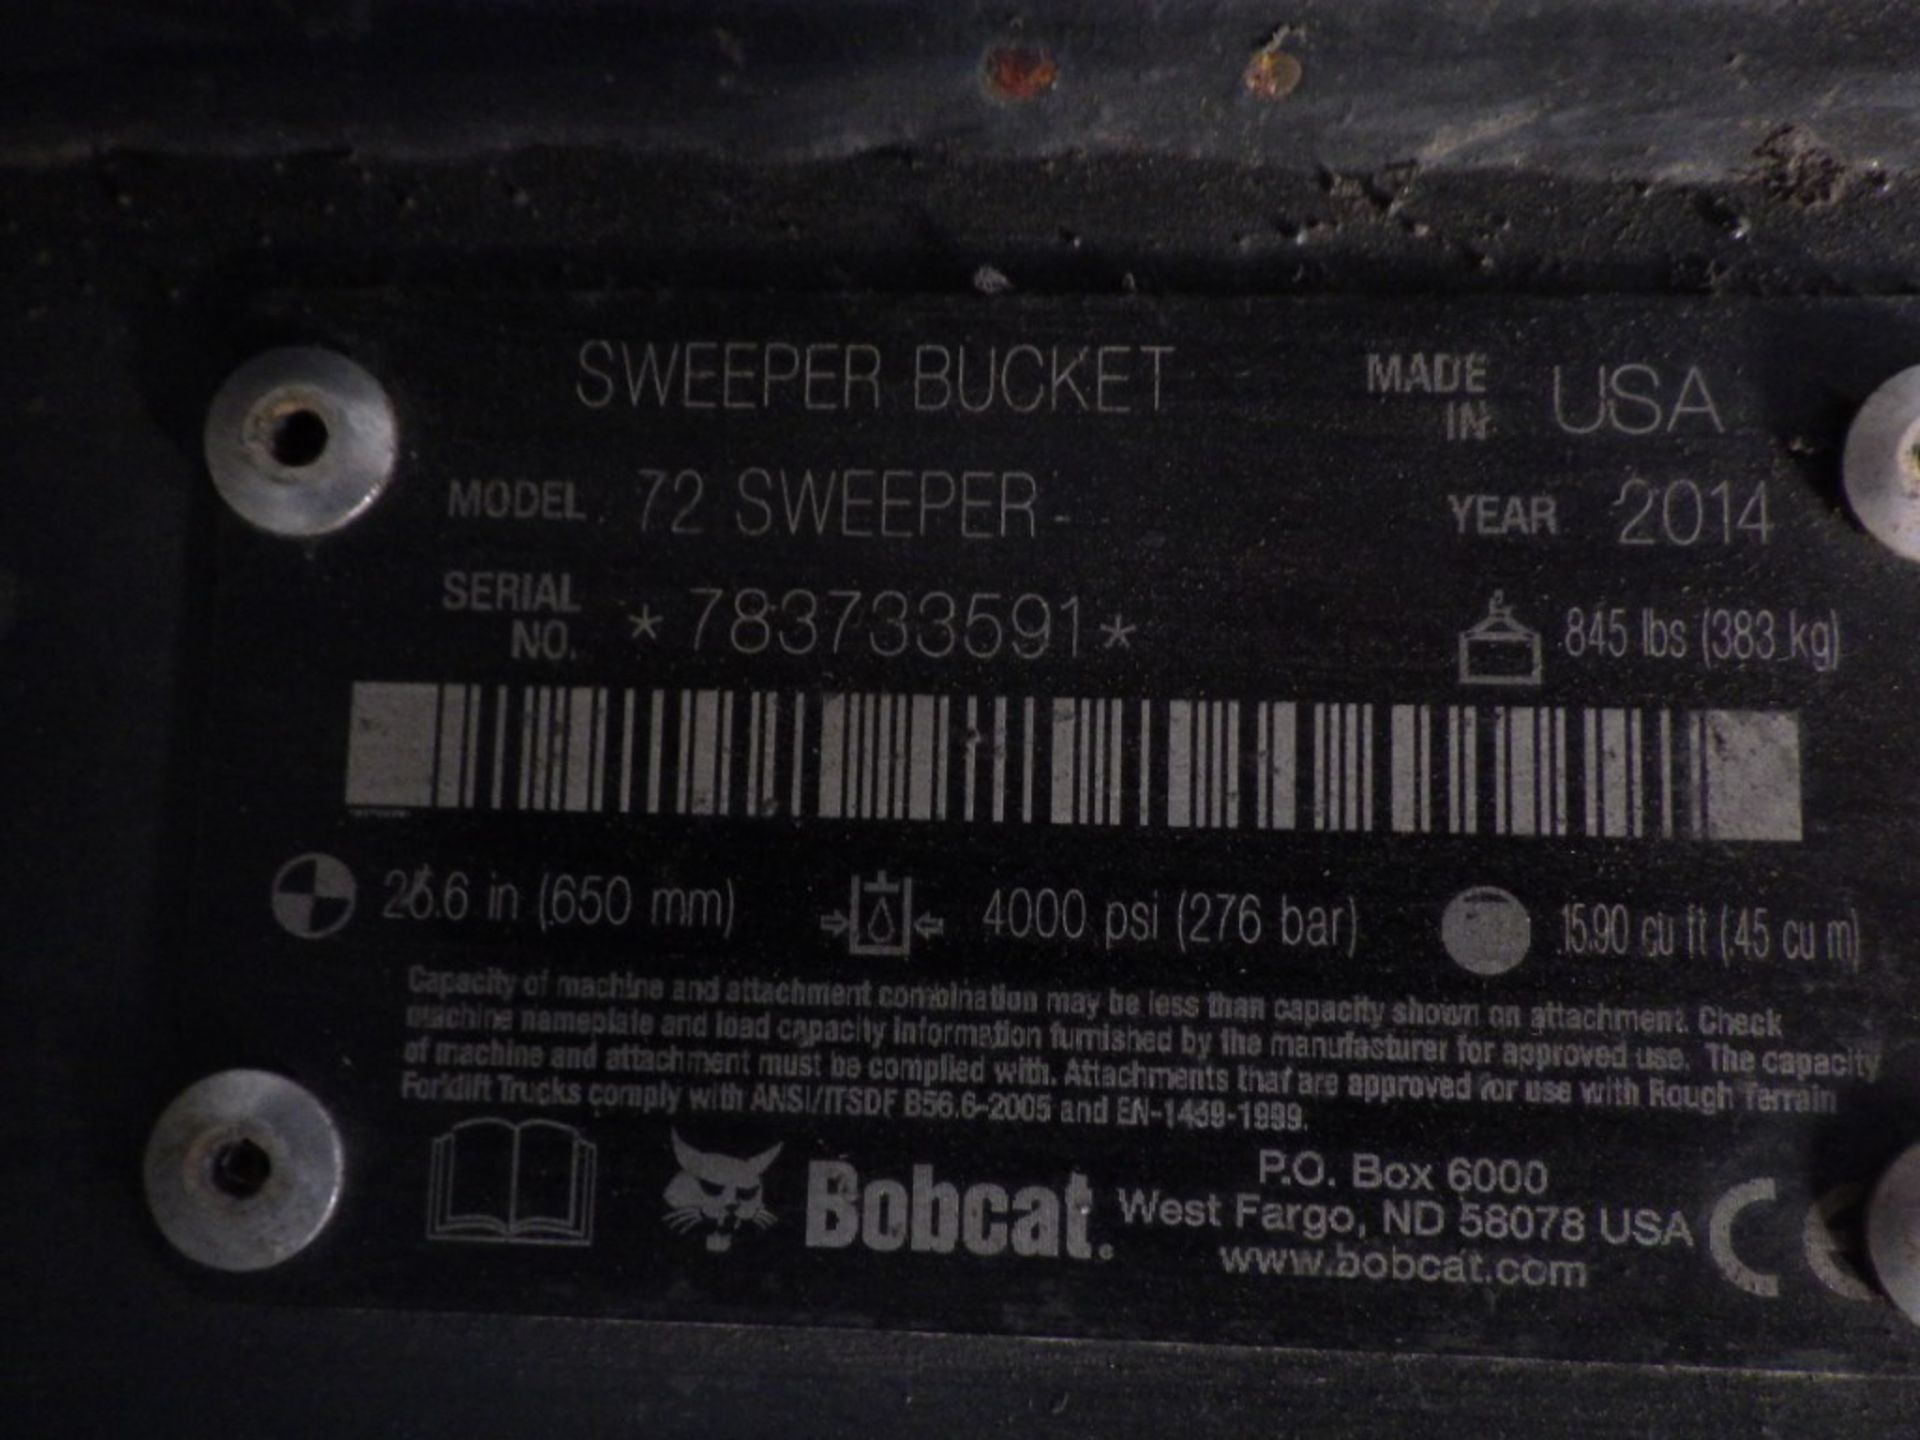 BOBCAT 72 SWEEPER BUCKET S/N: 783733591 (YEAR 2014) - Image 4 of 10